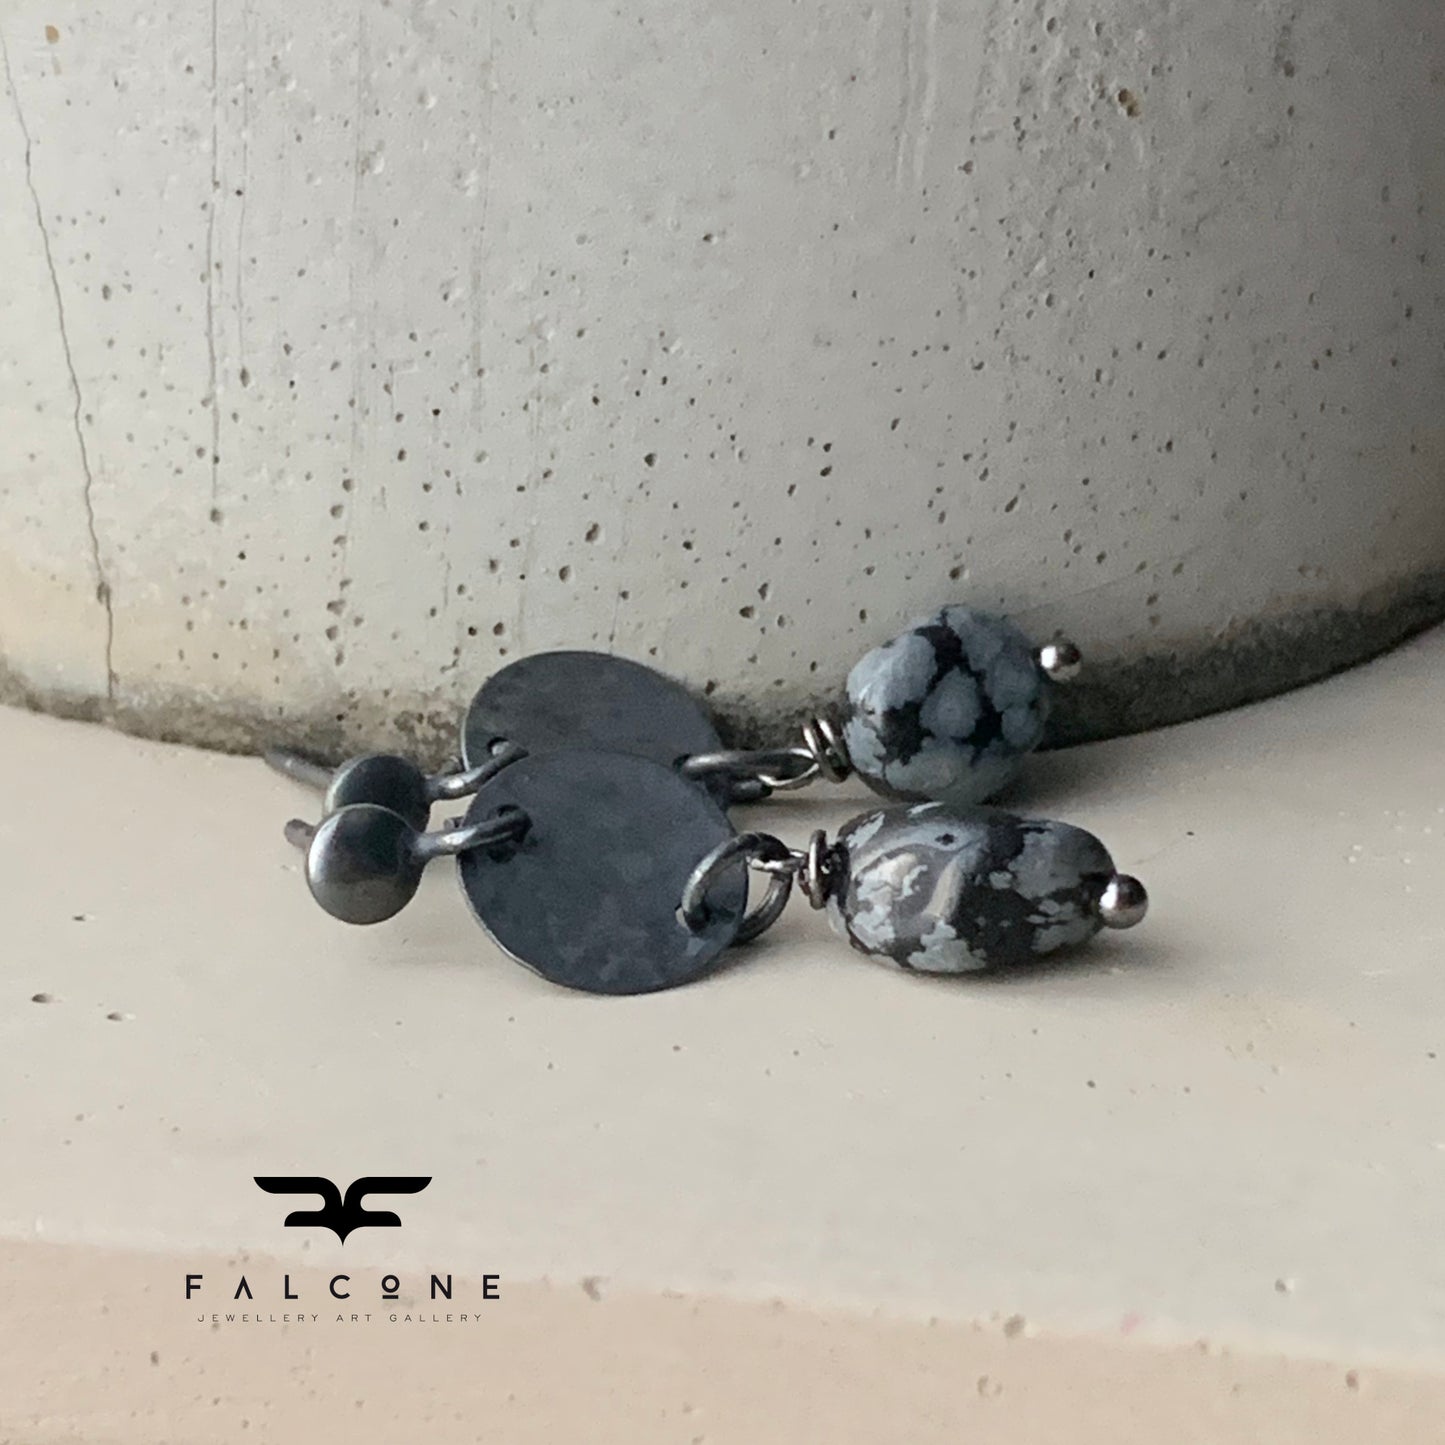 Silver stud earrings with obsidian nuggets 'Dalmatian in Negative'